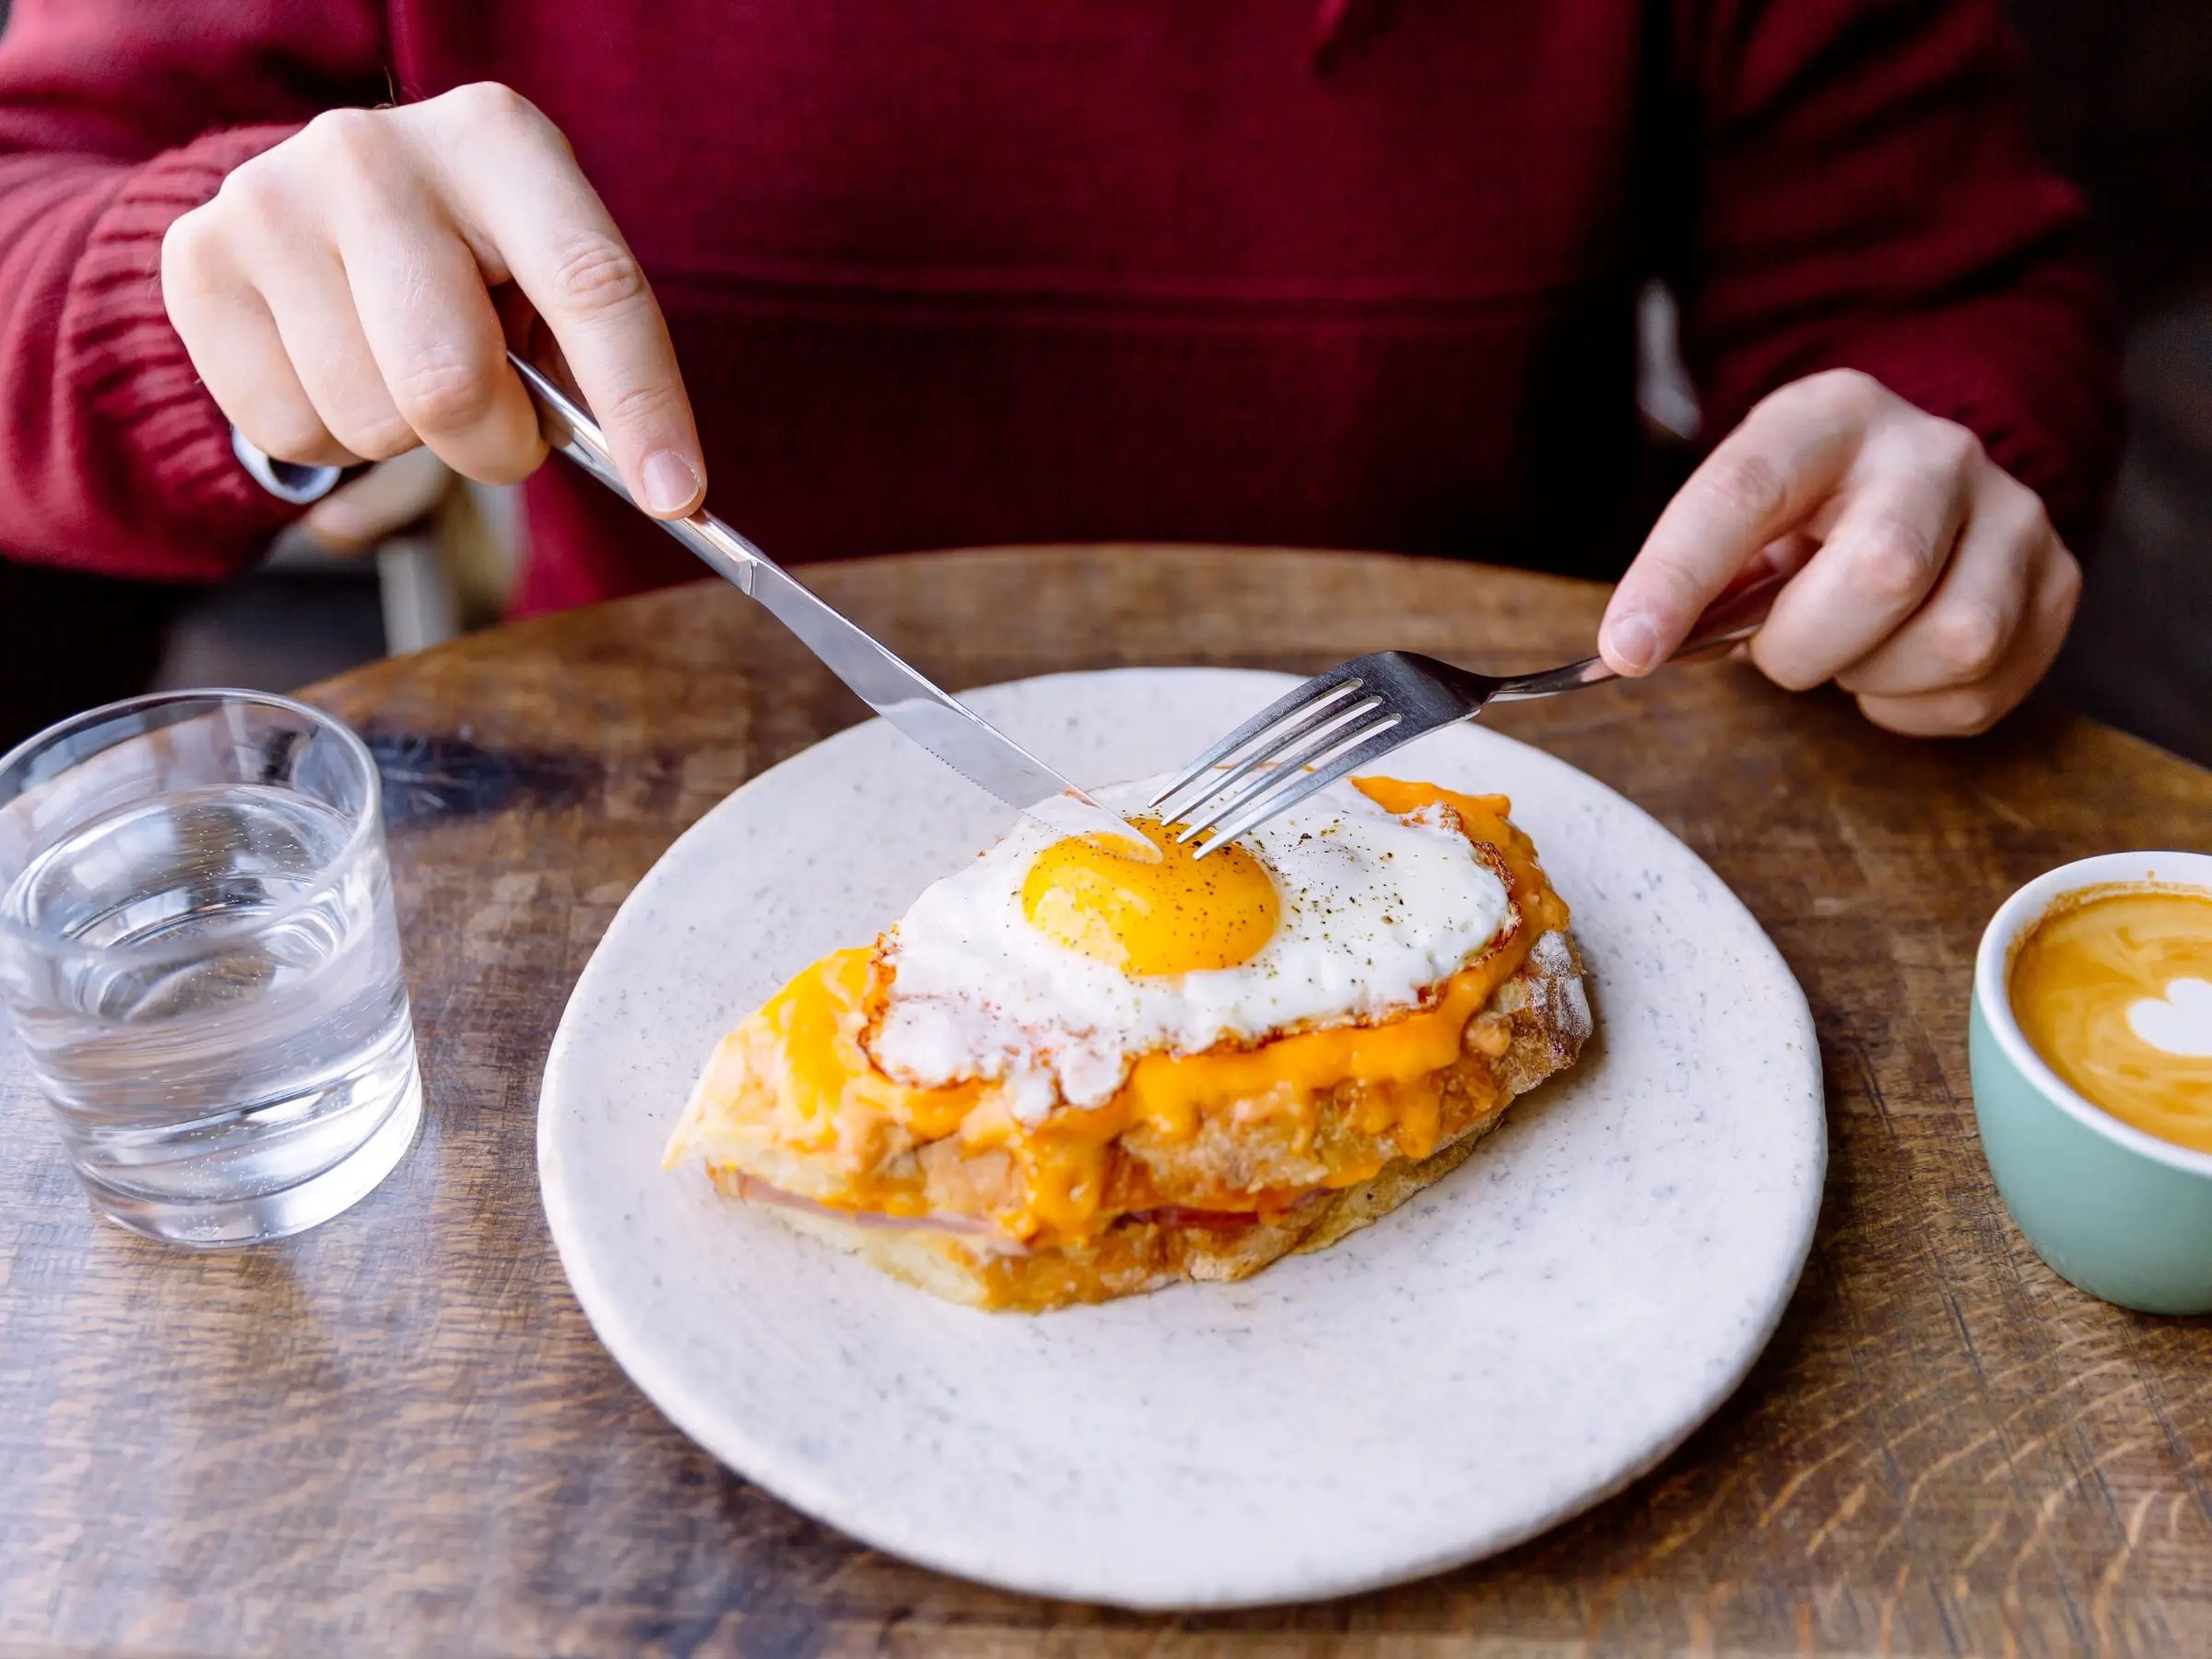 A man eating cheesy eggs on toast.